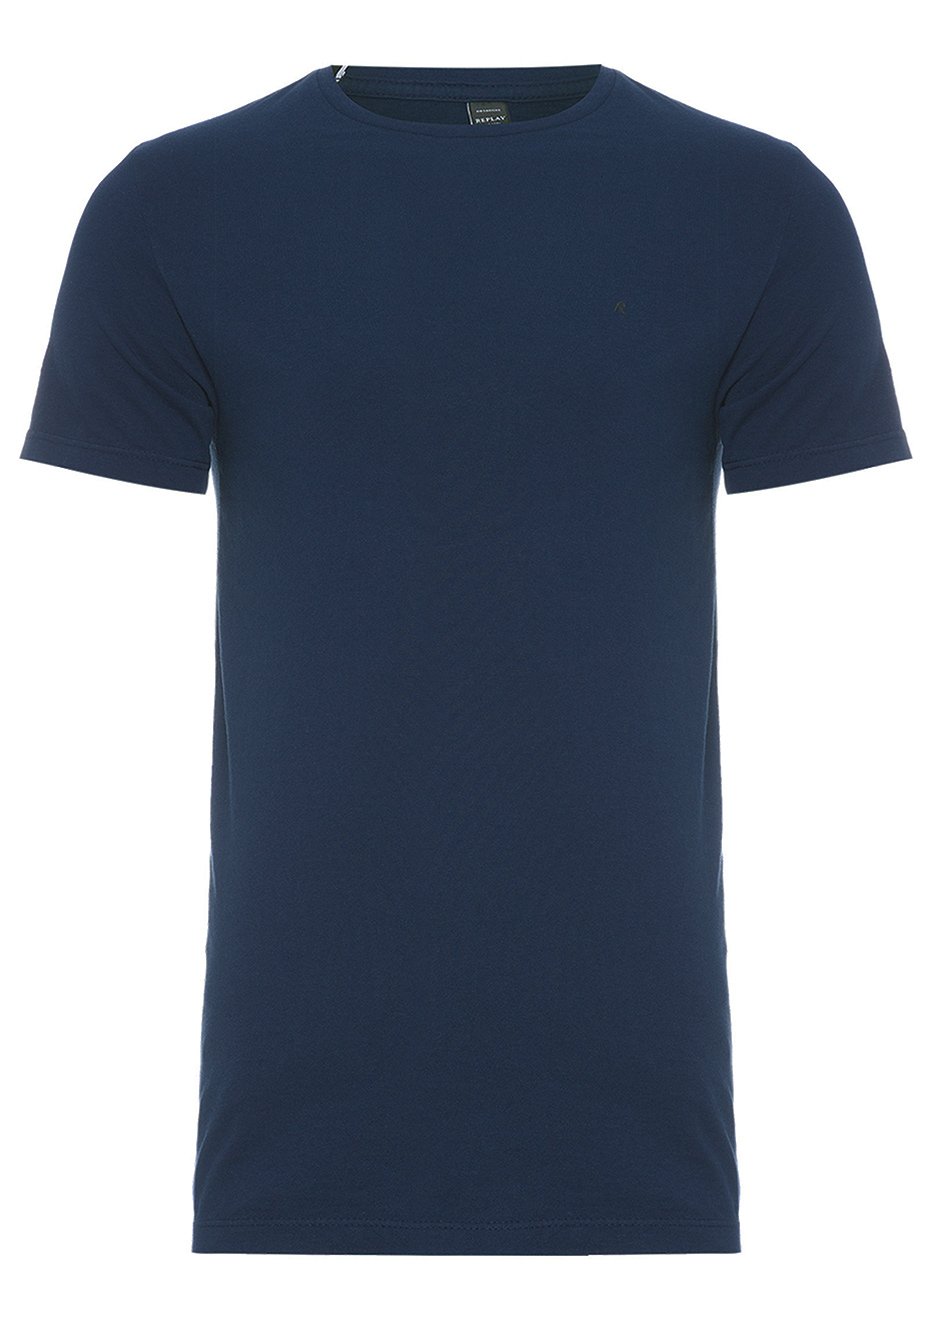 Camiseta Replay Masculina R Basic Azul Marinho